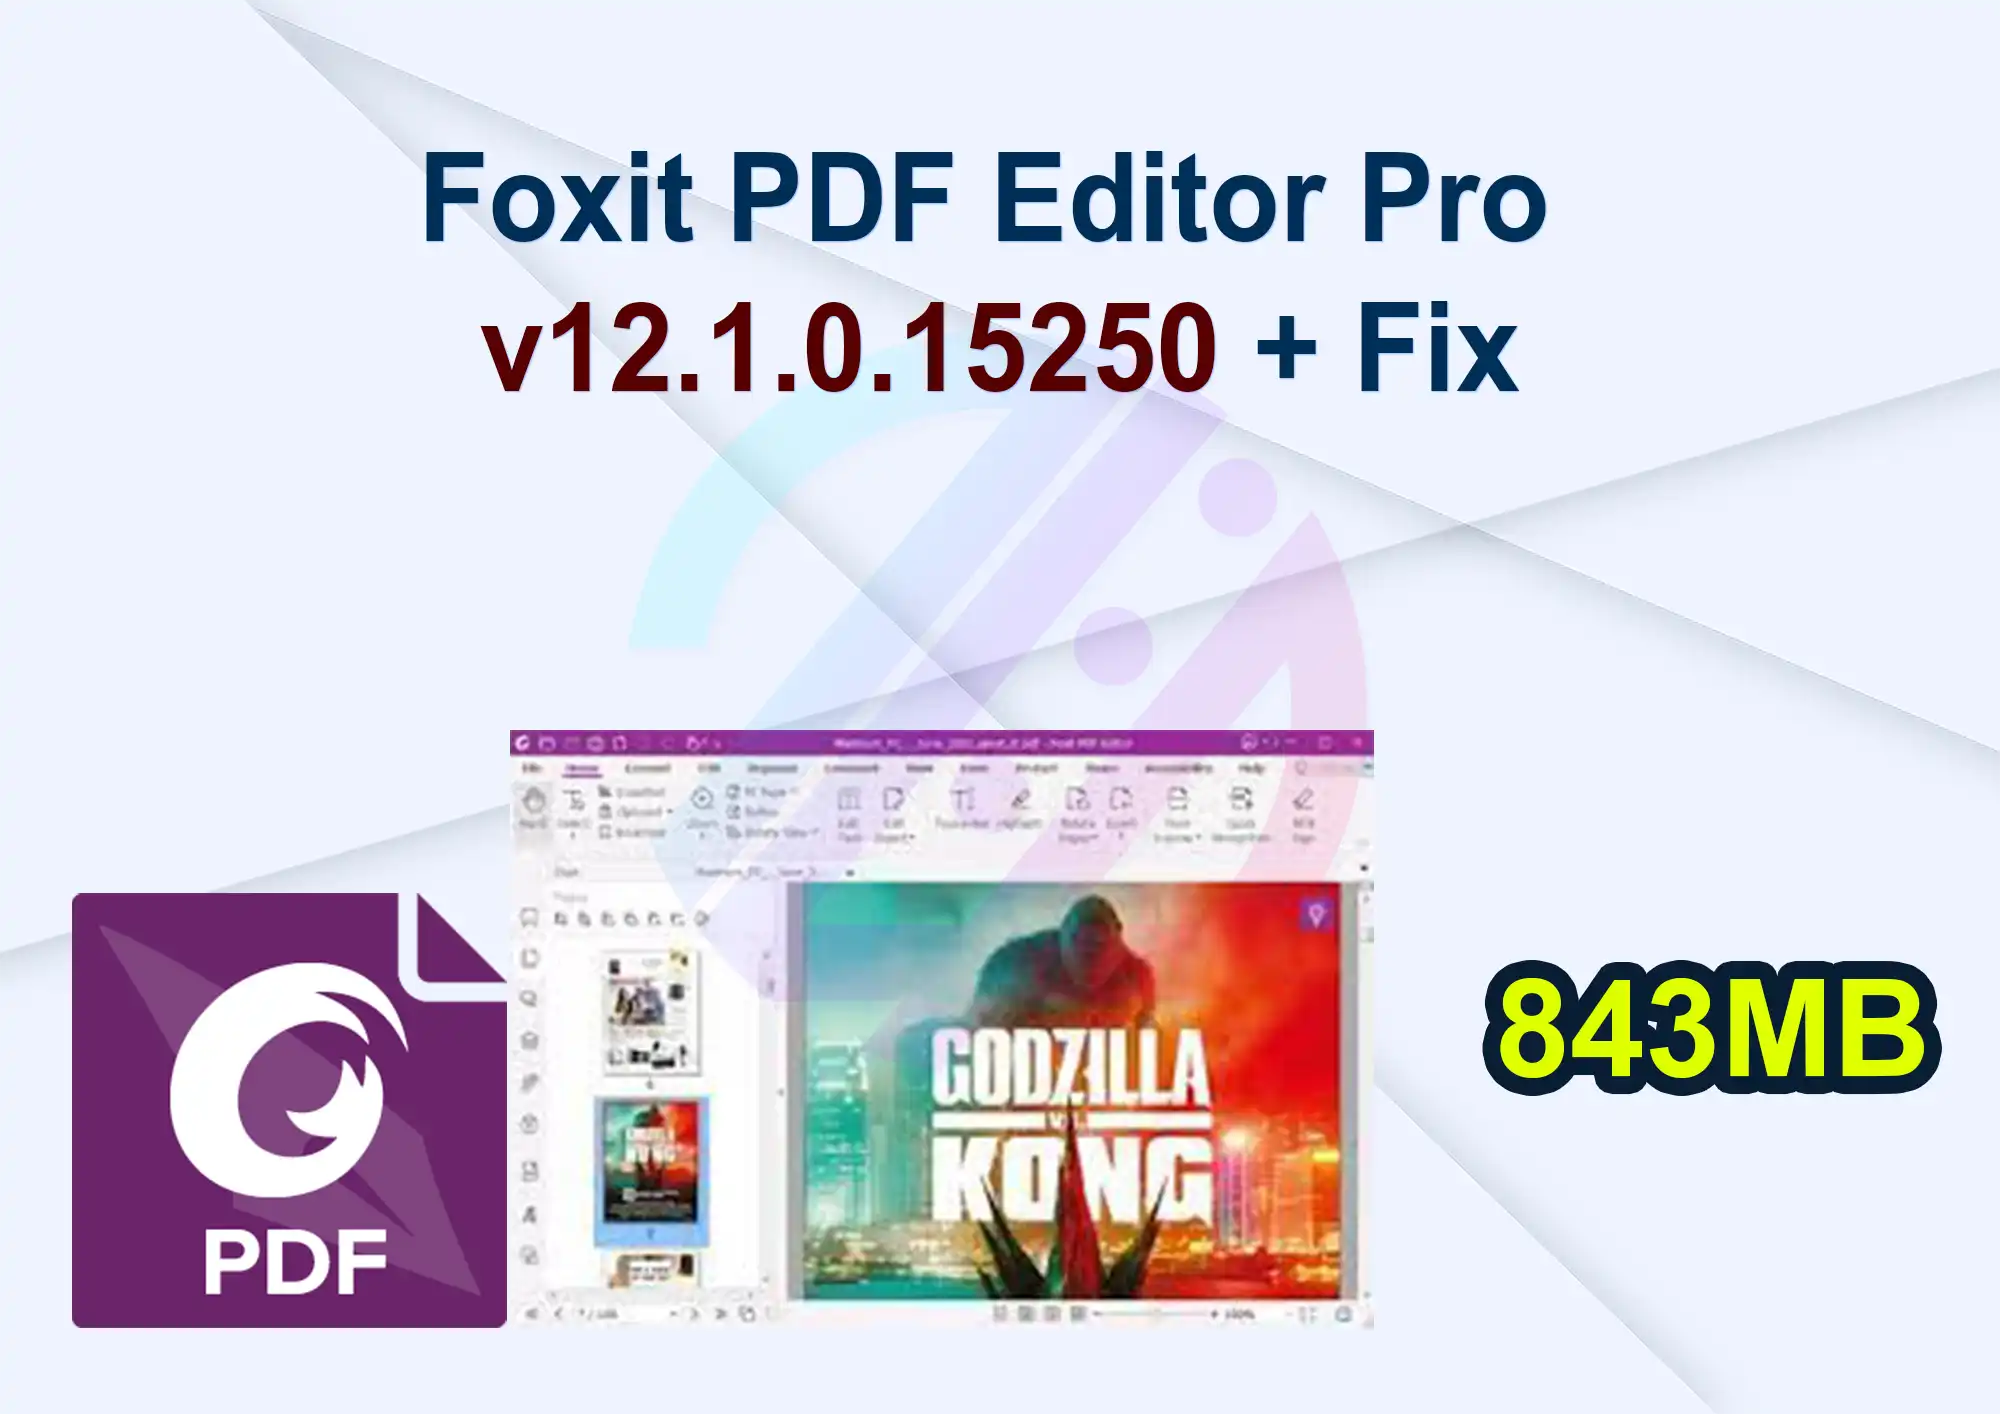 Foxit PDF Editor Pro v12.1.0.15250 + Fix